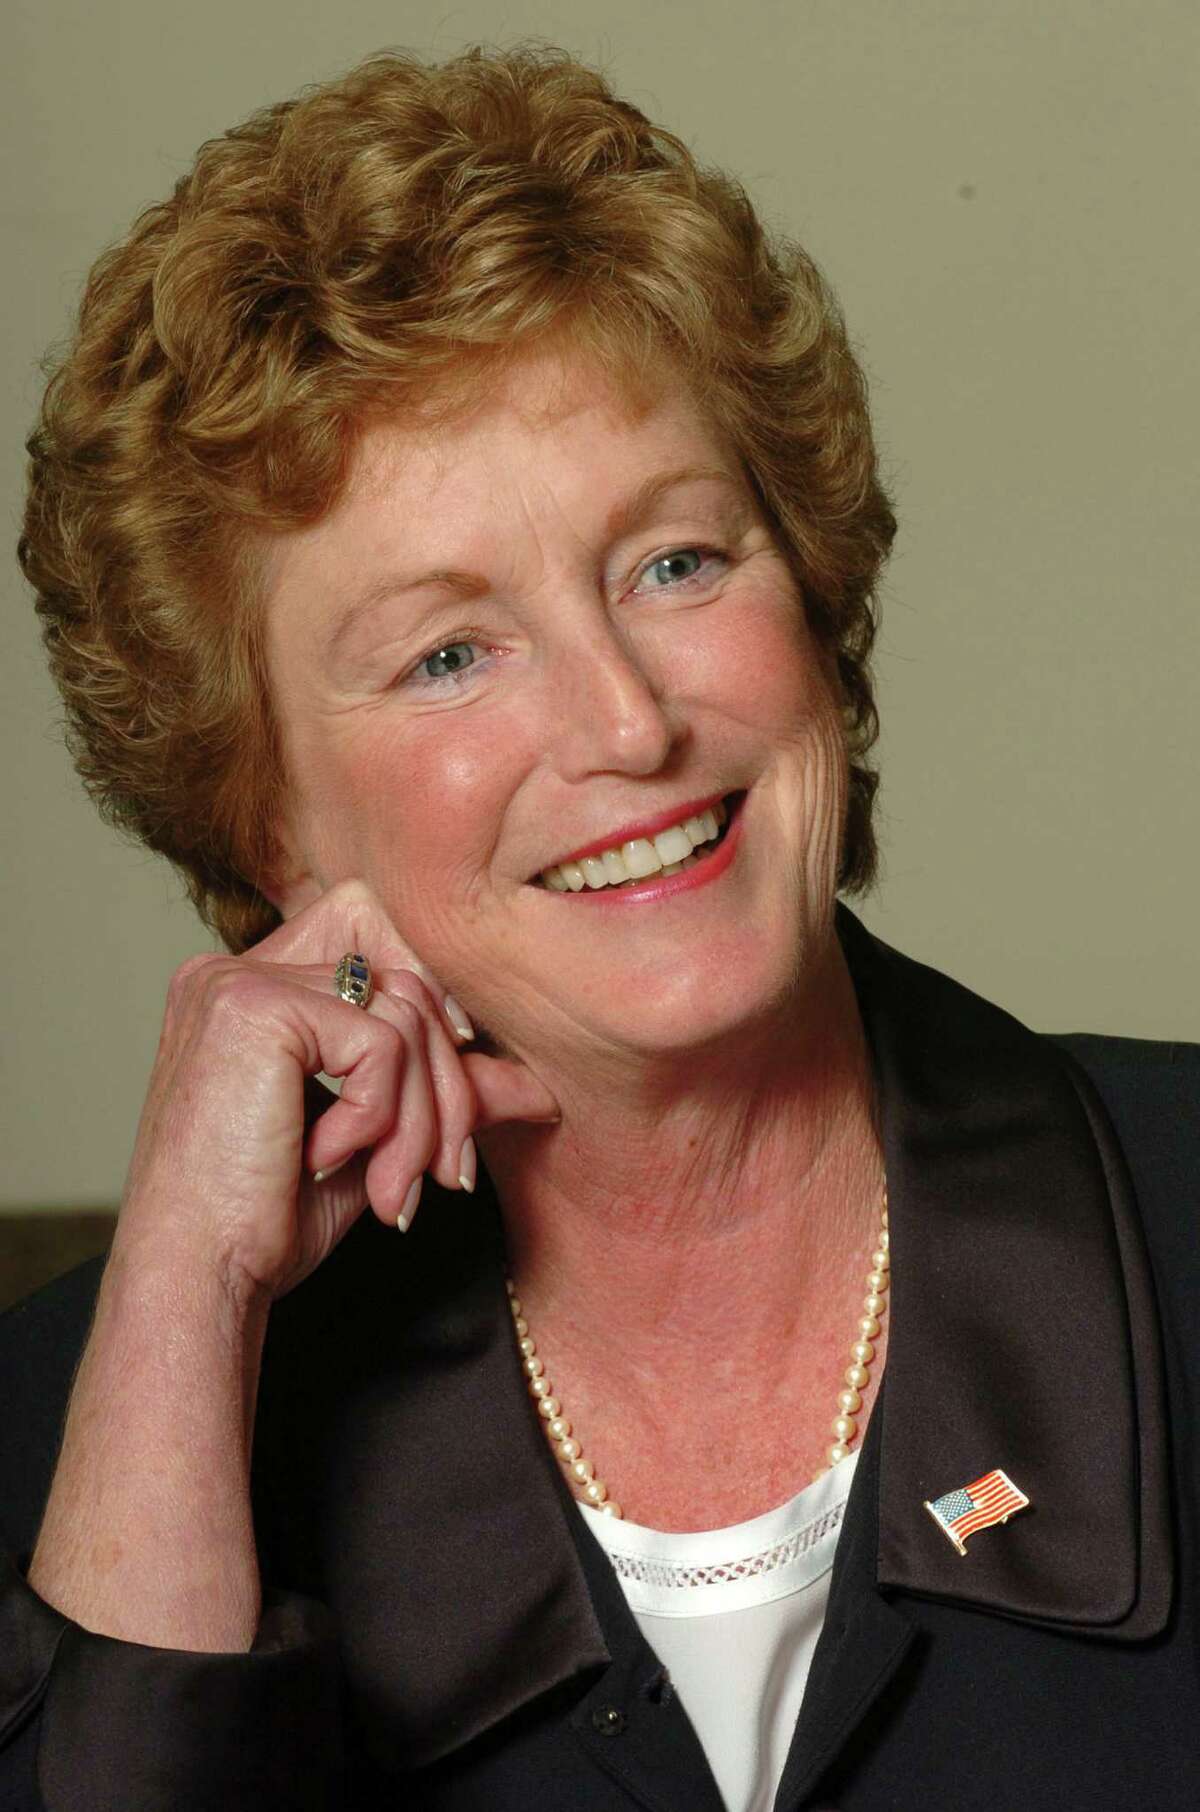 Former Connecticut Governor Jodi